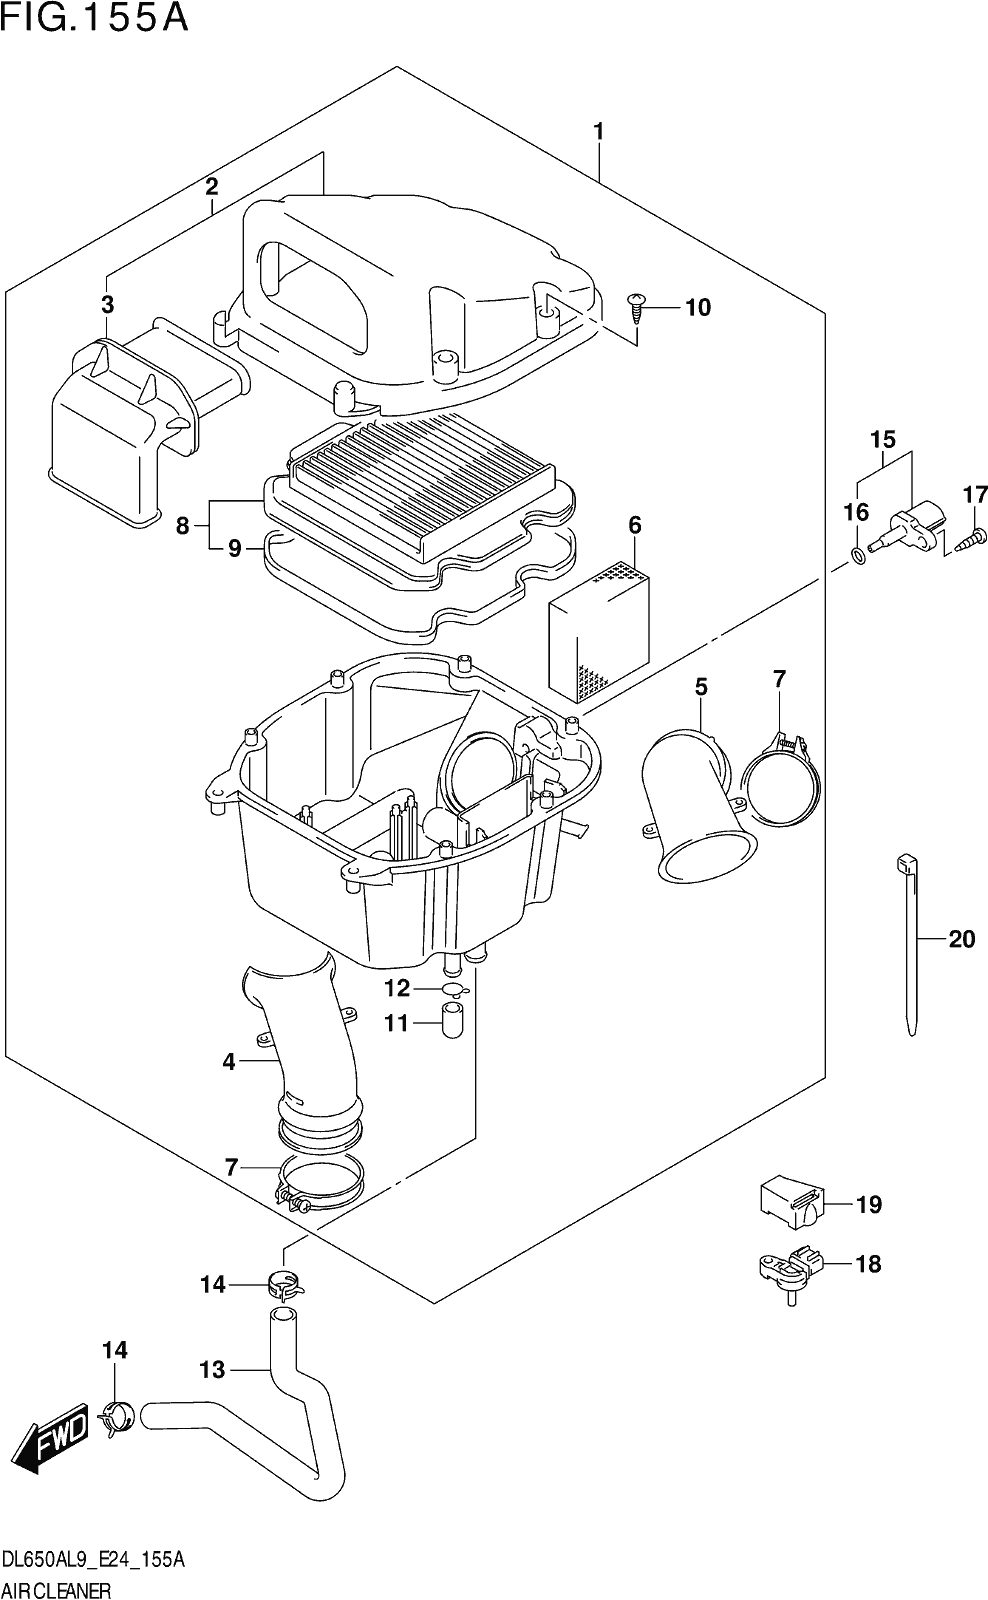 Fig.155a Air Cleaner